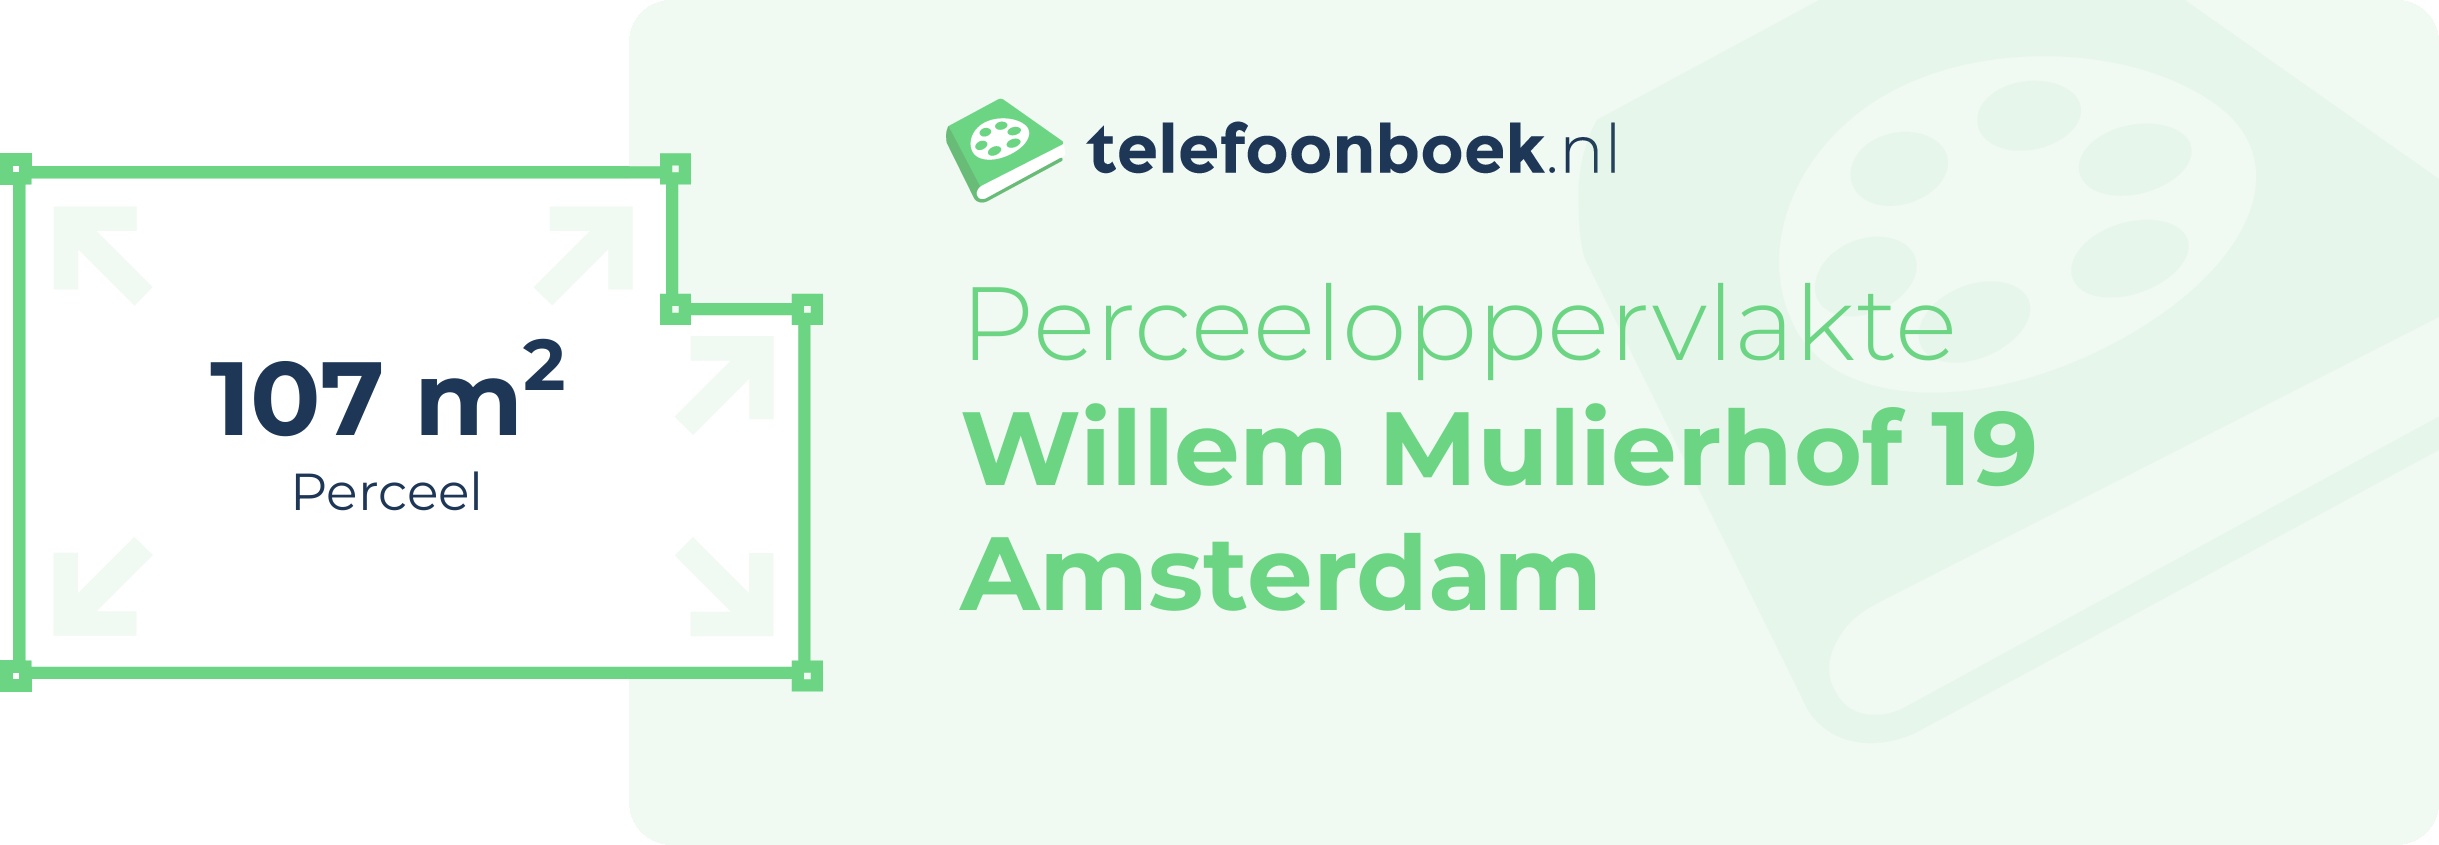 Perceeloppervlakte Willem Mulierhof 19 Amsterdam